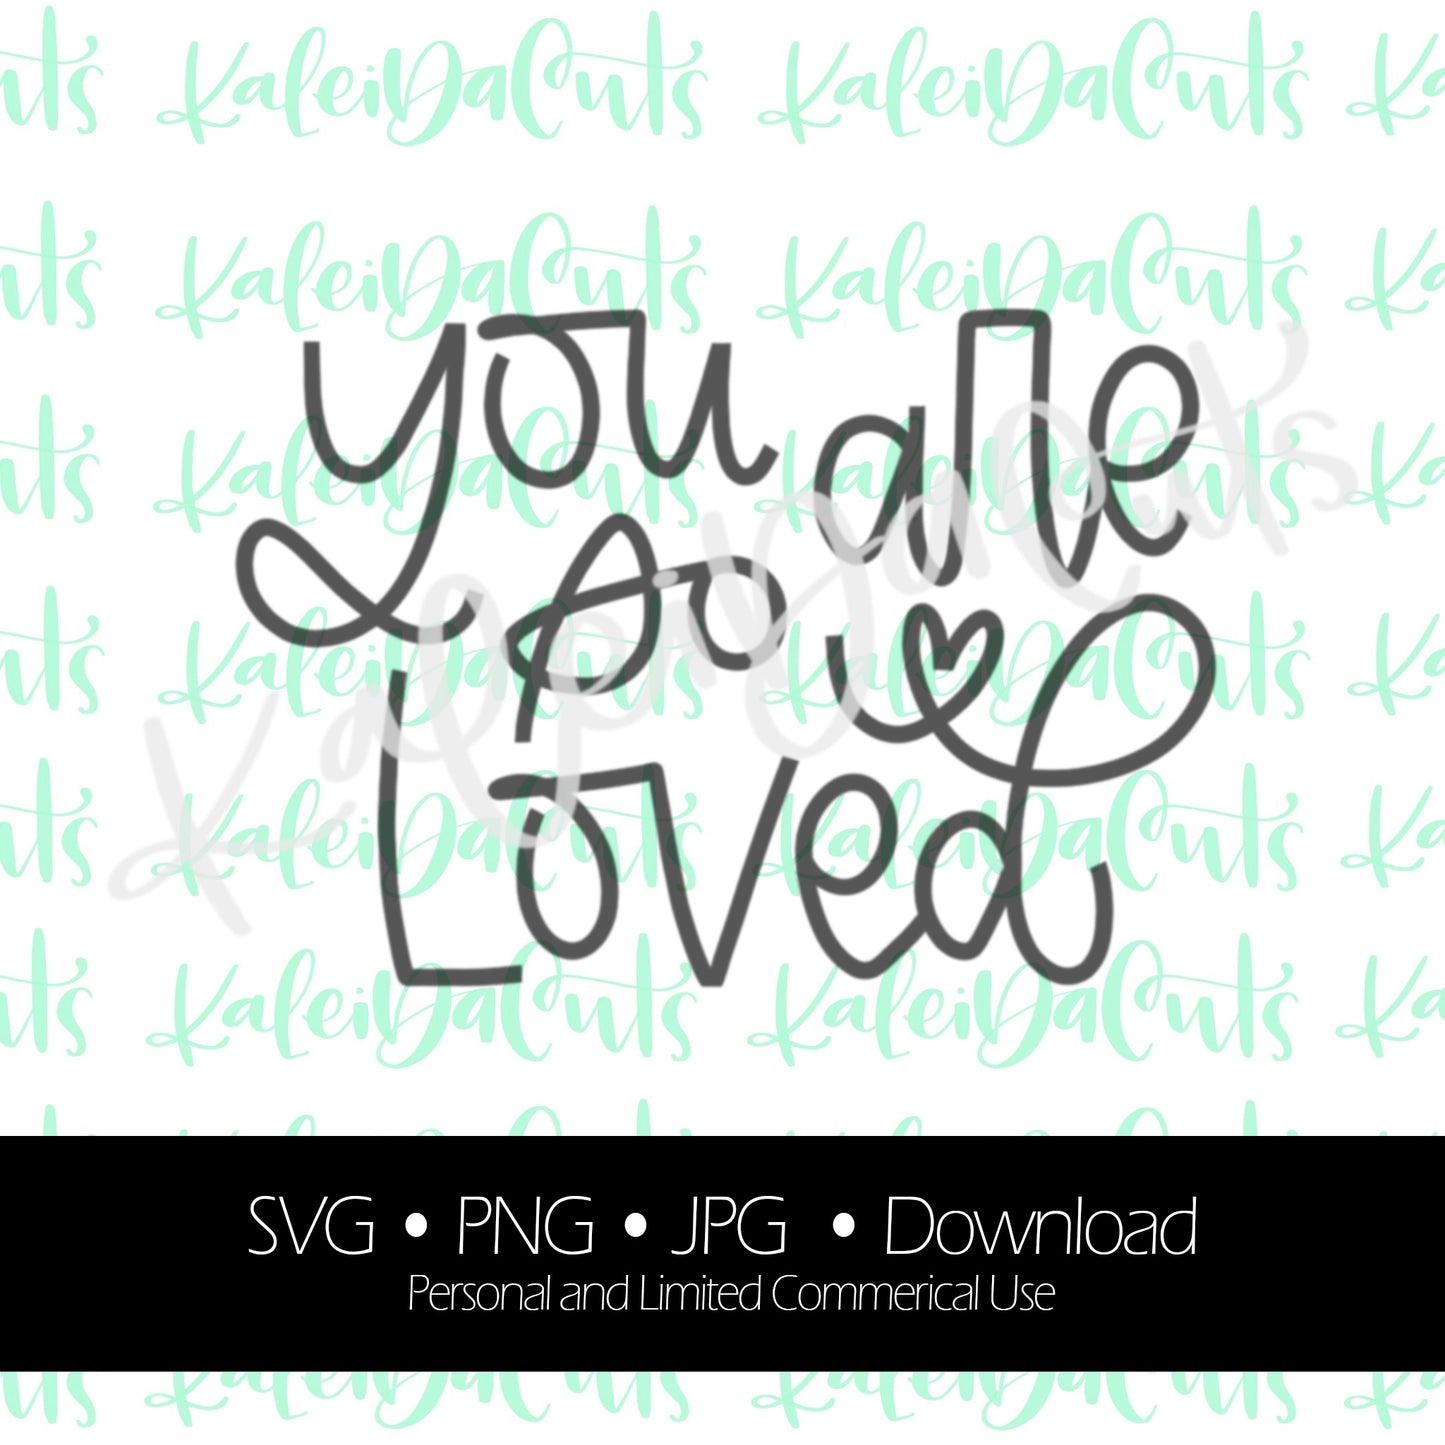 You are so Loved Lettering Digital Download. SVG.